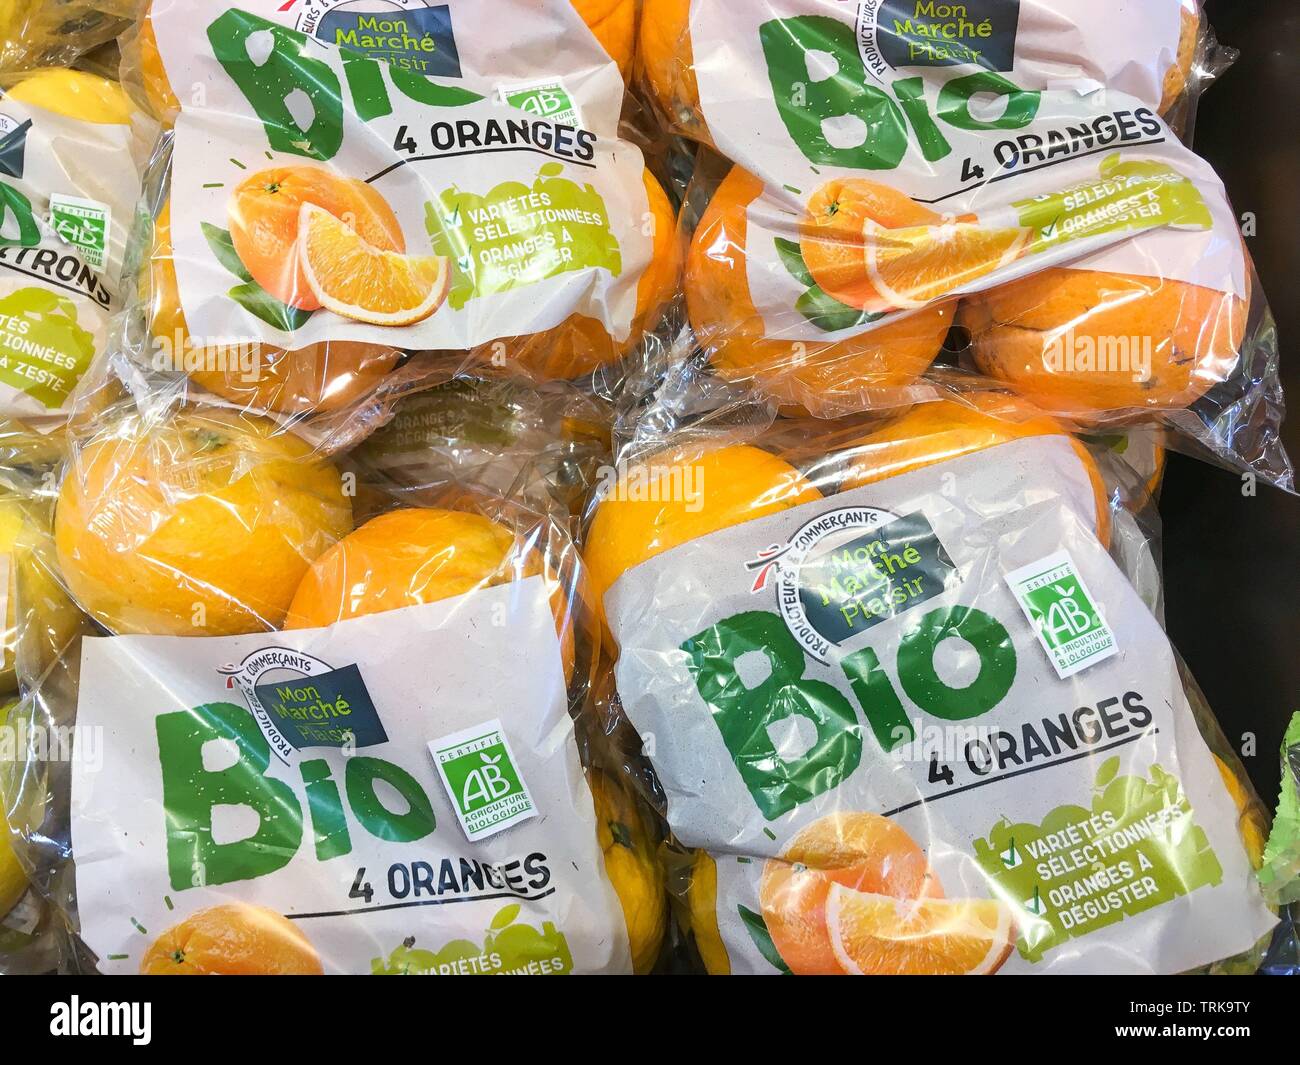 Organic oranges packaged in plastic blister packs, France Stock Photo